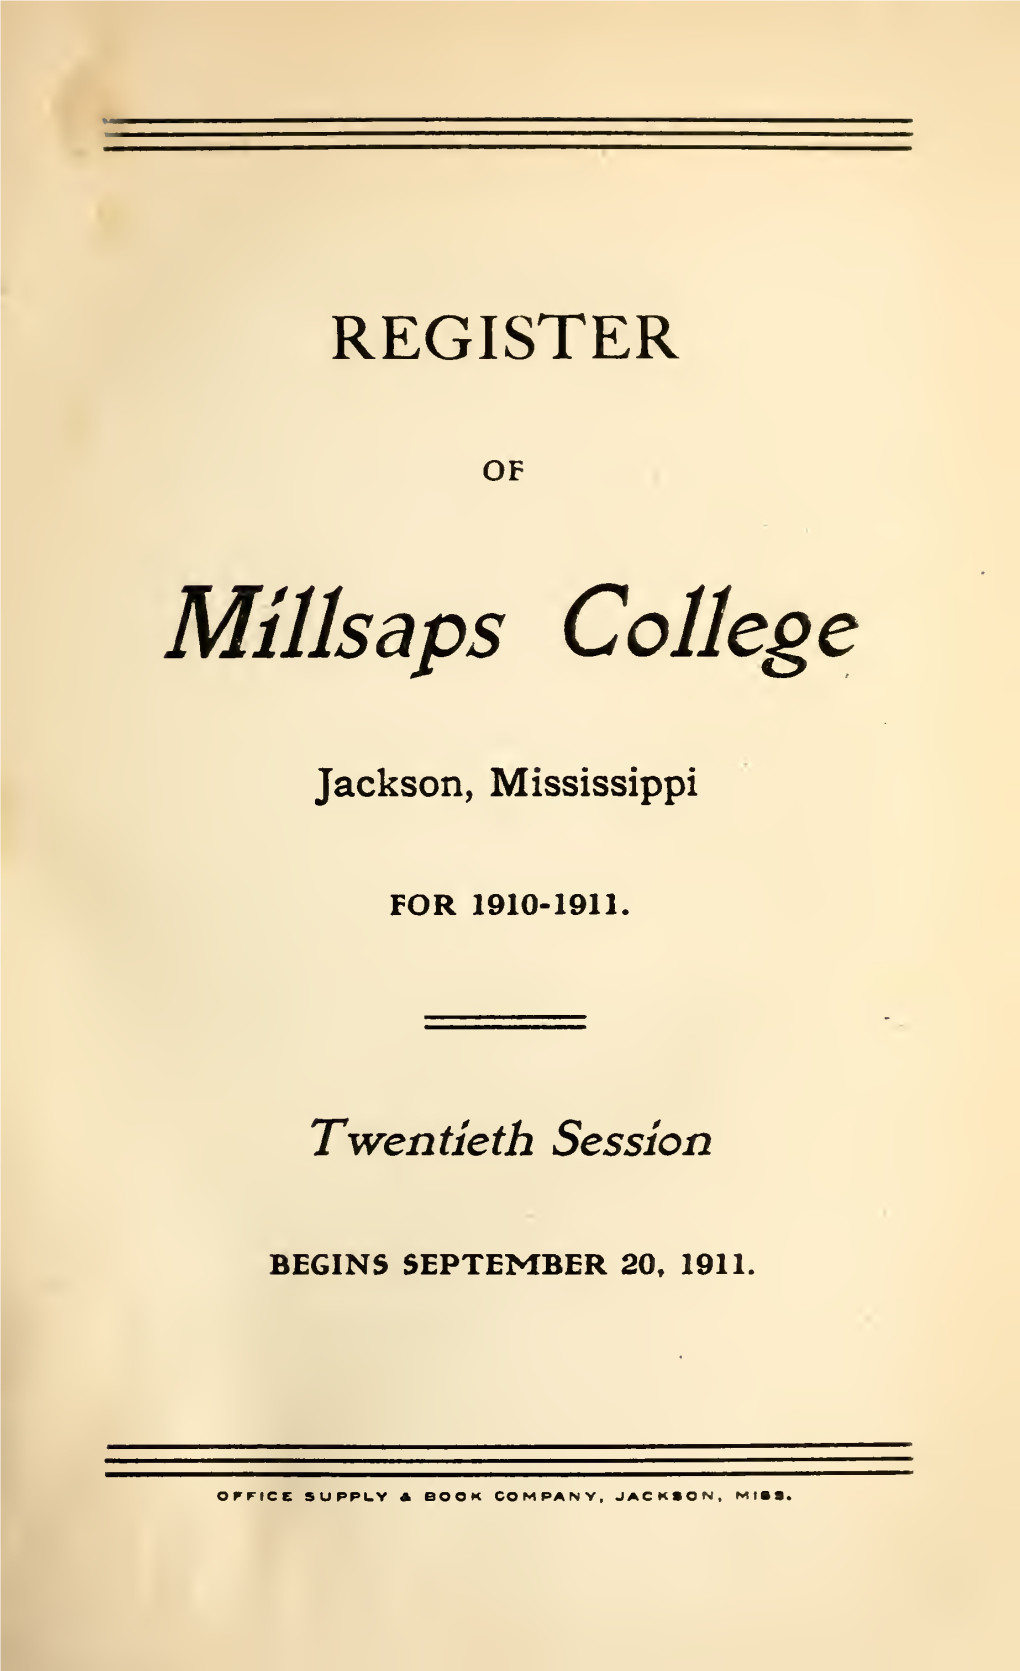 Millsaps College Catalog, 1910-1911